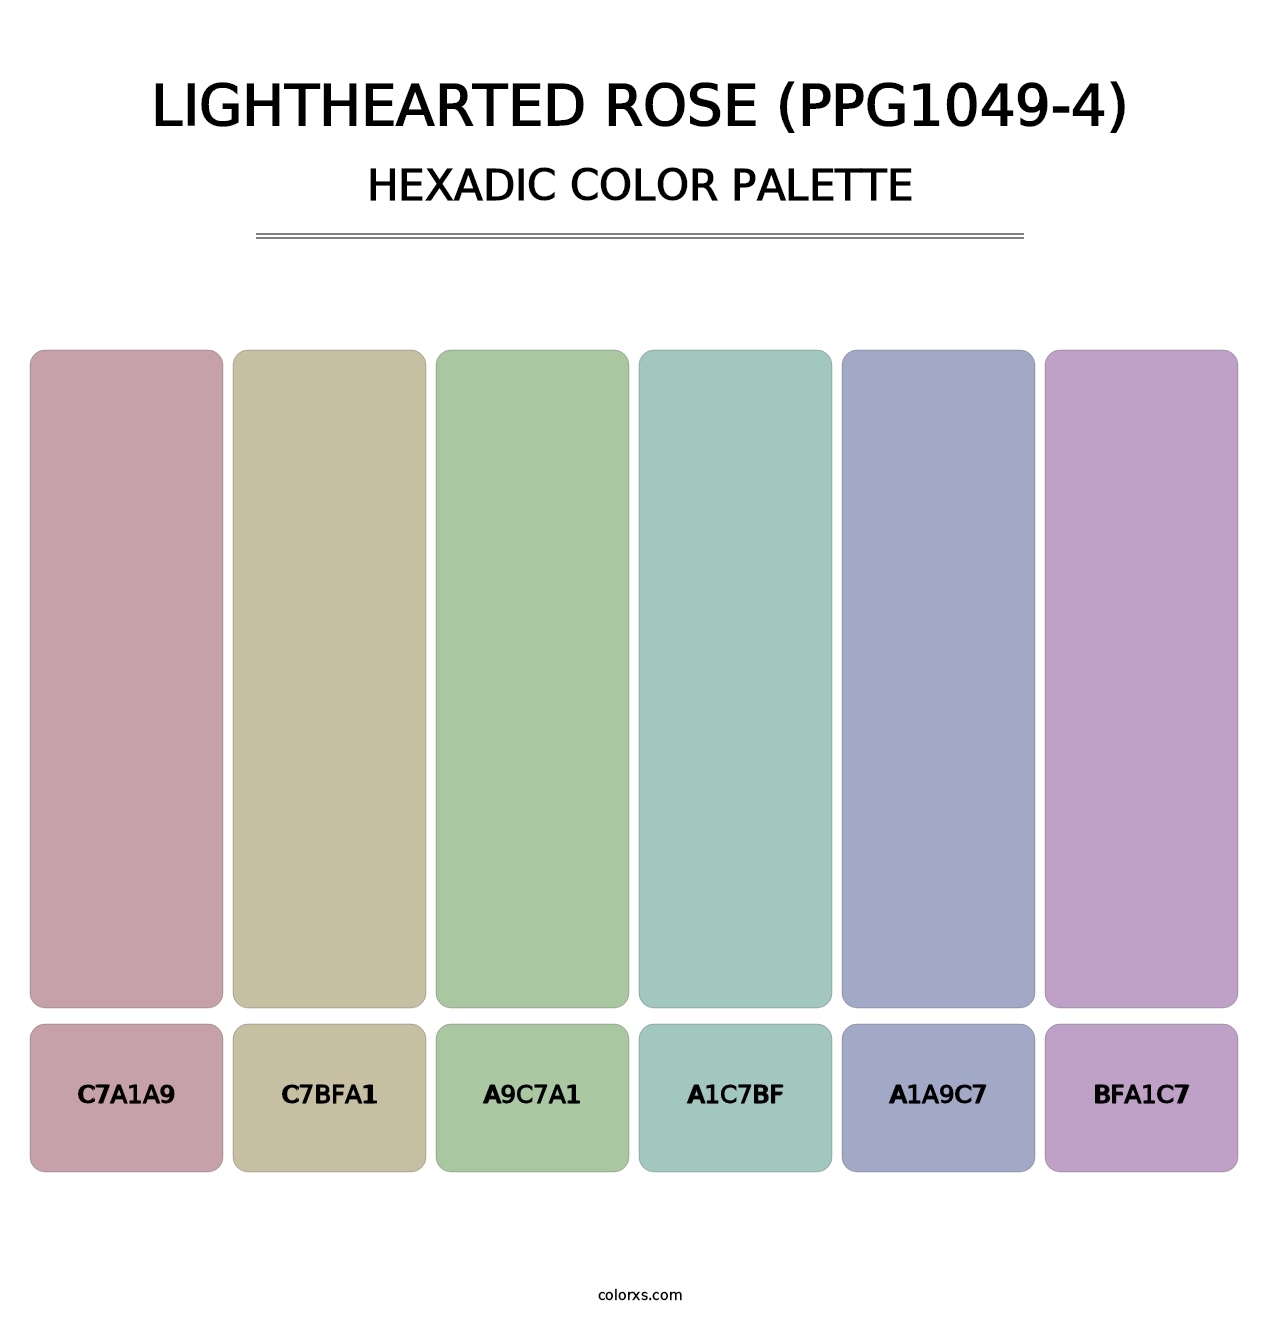 Lighthearted Rose (PPG1049-4) - Hexadic Color Palette